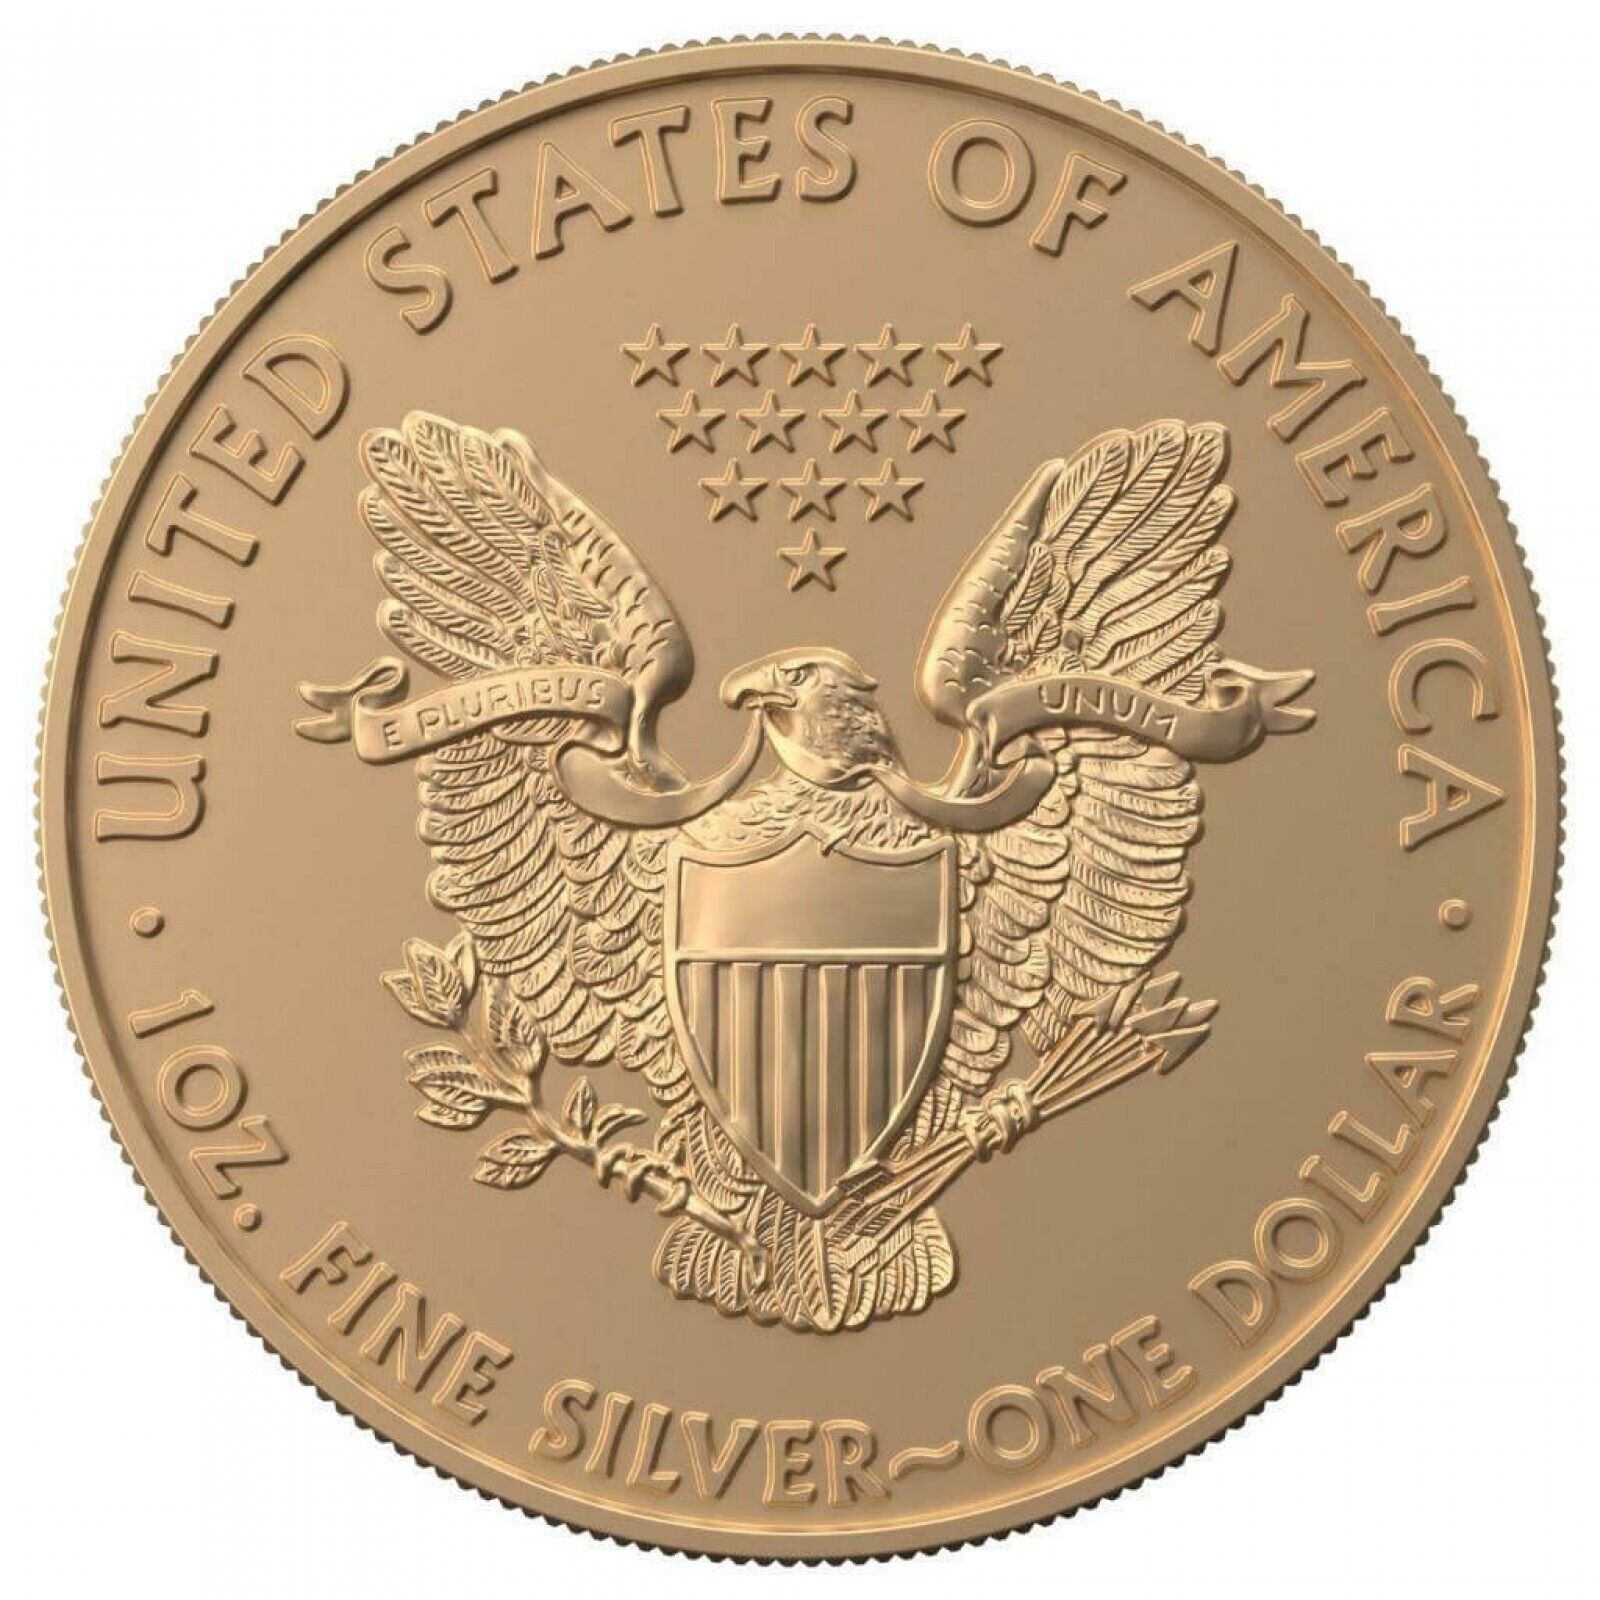 1 Oz Silver Coin 2019 $1 Liberty Faces of America - American Football No 10-classypw.com-3